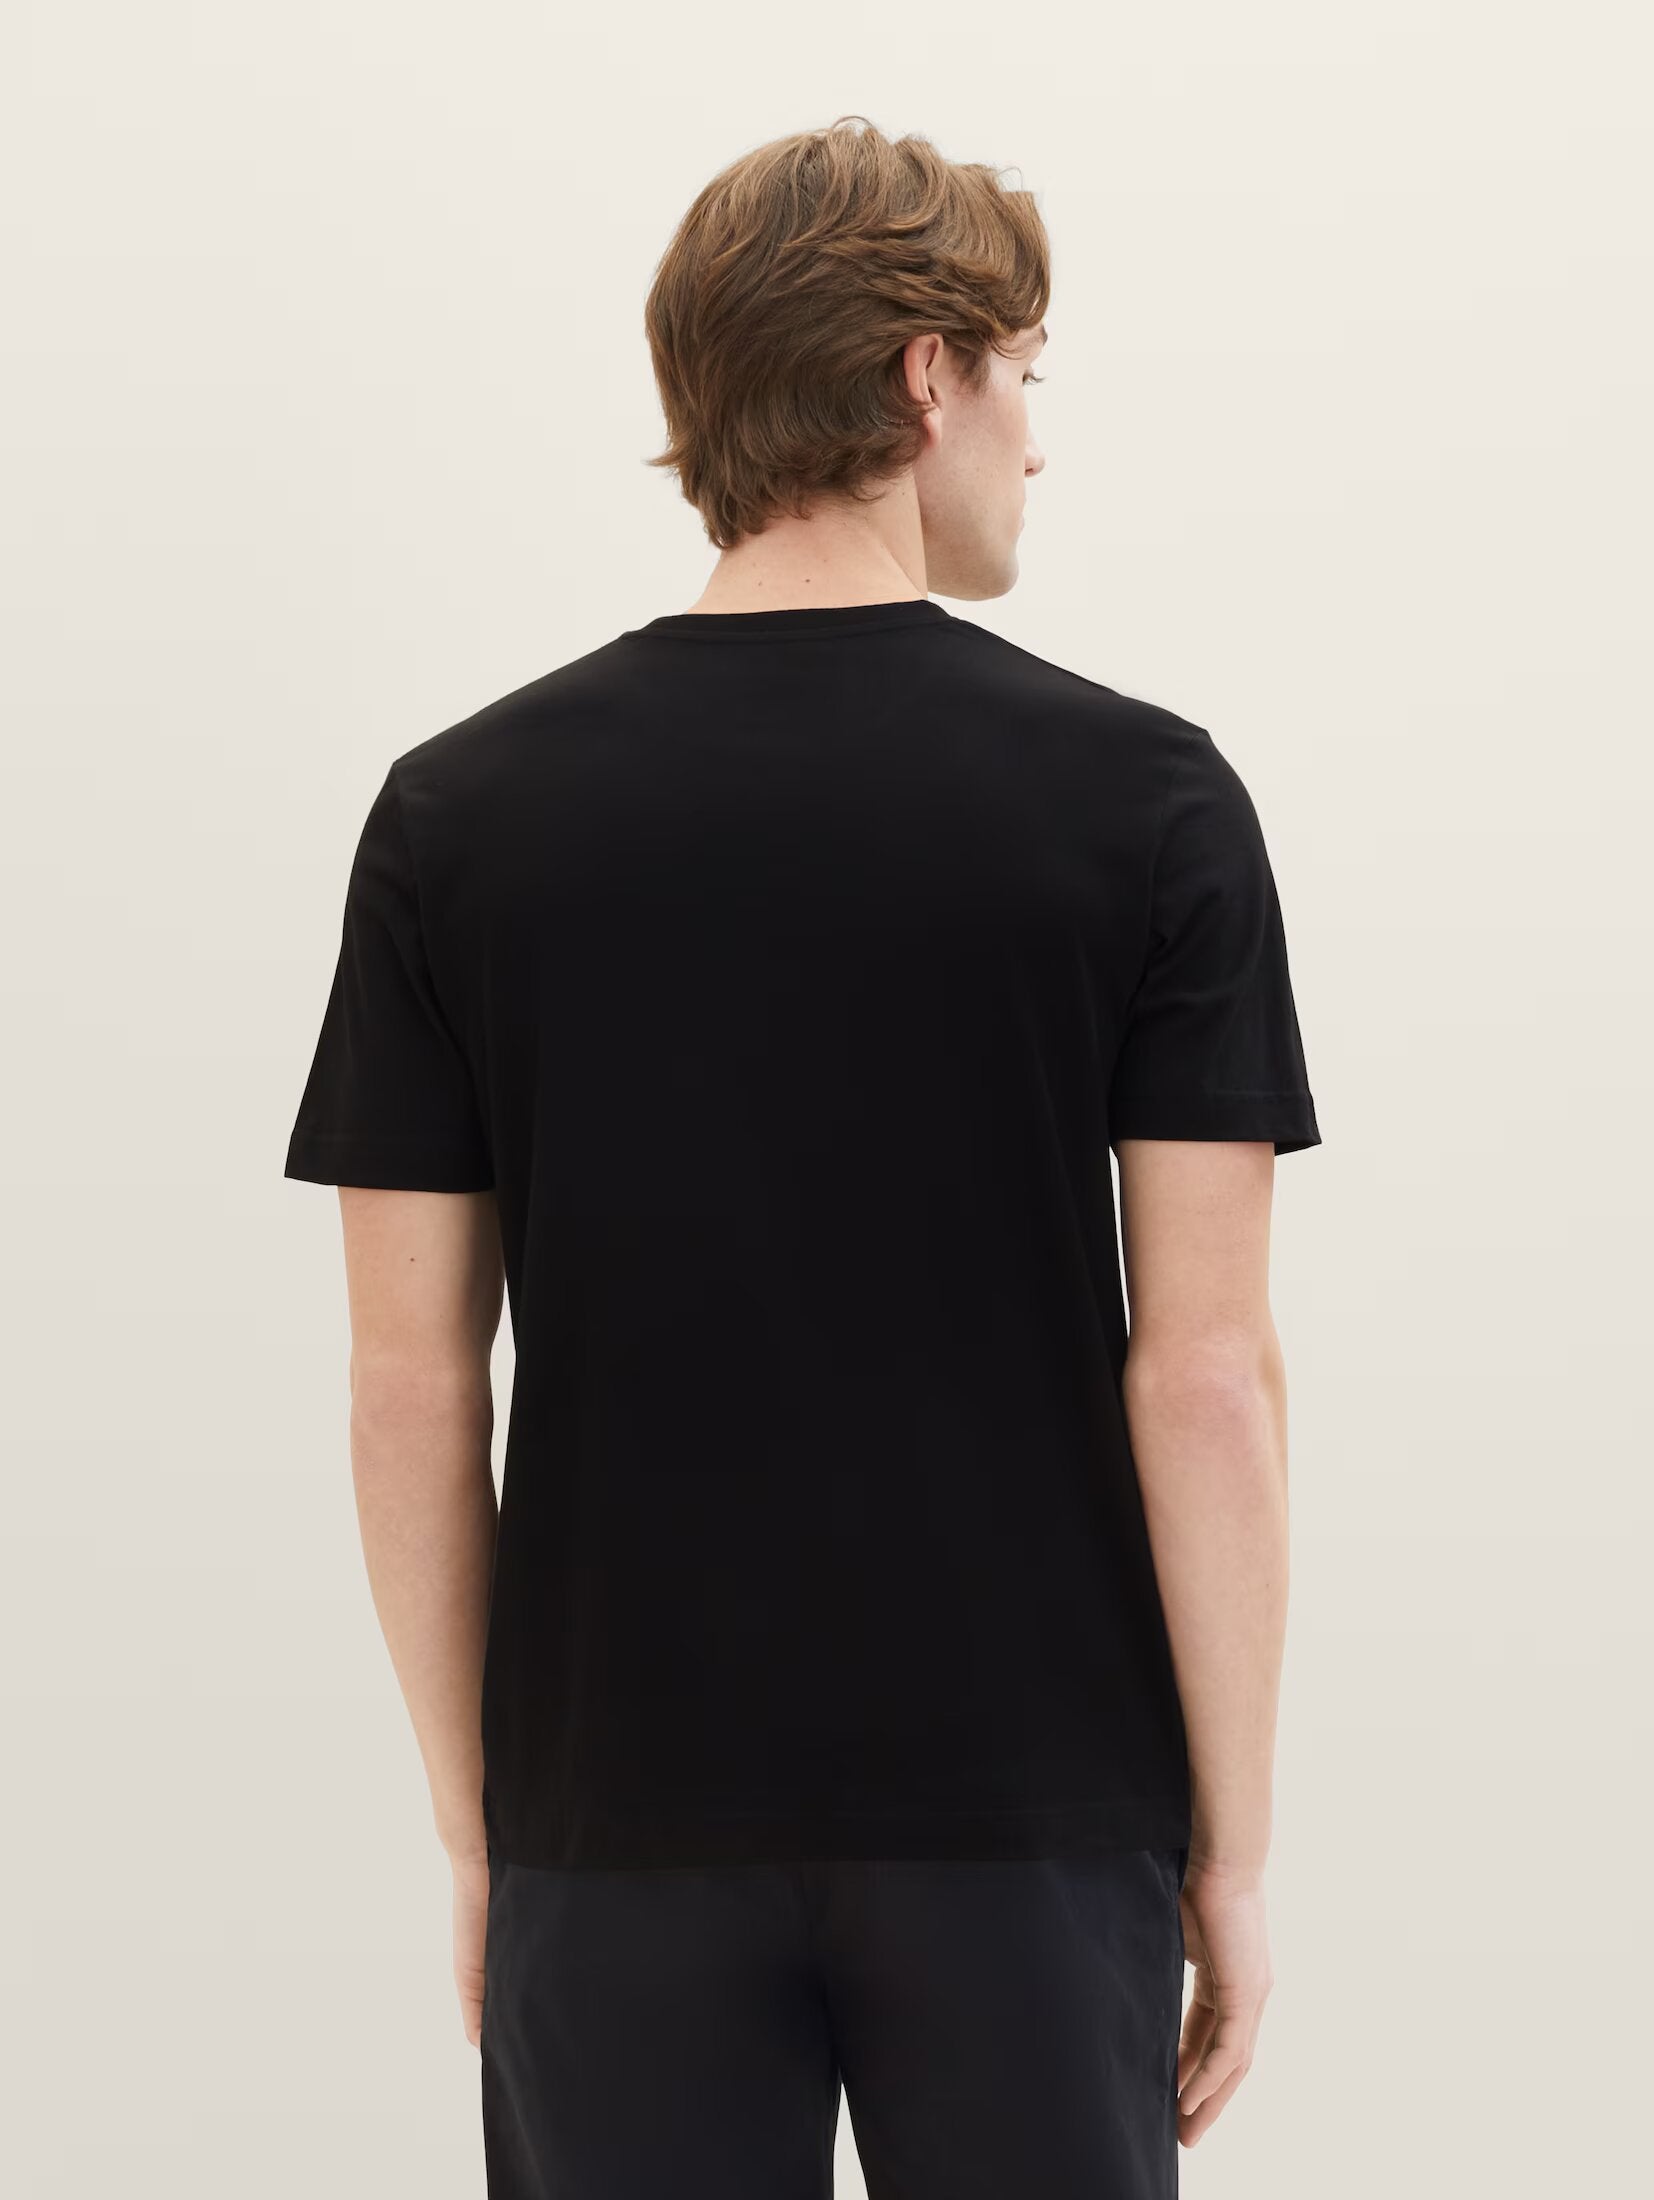 Tom Tailor Basic Black T-shirt With a Round Neckline